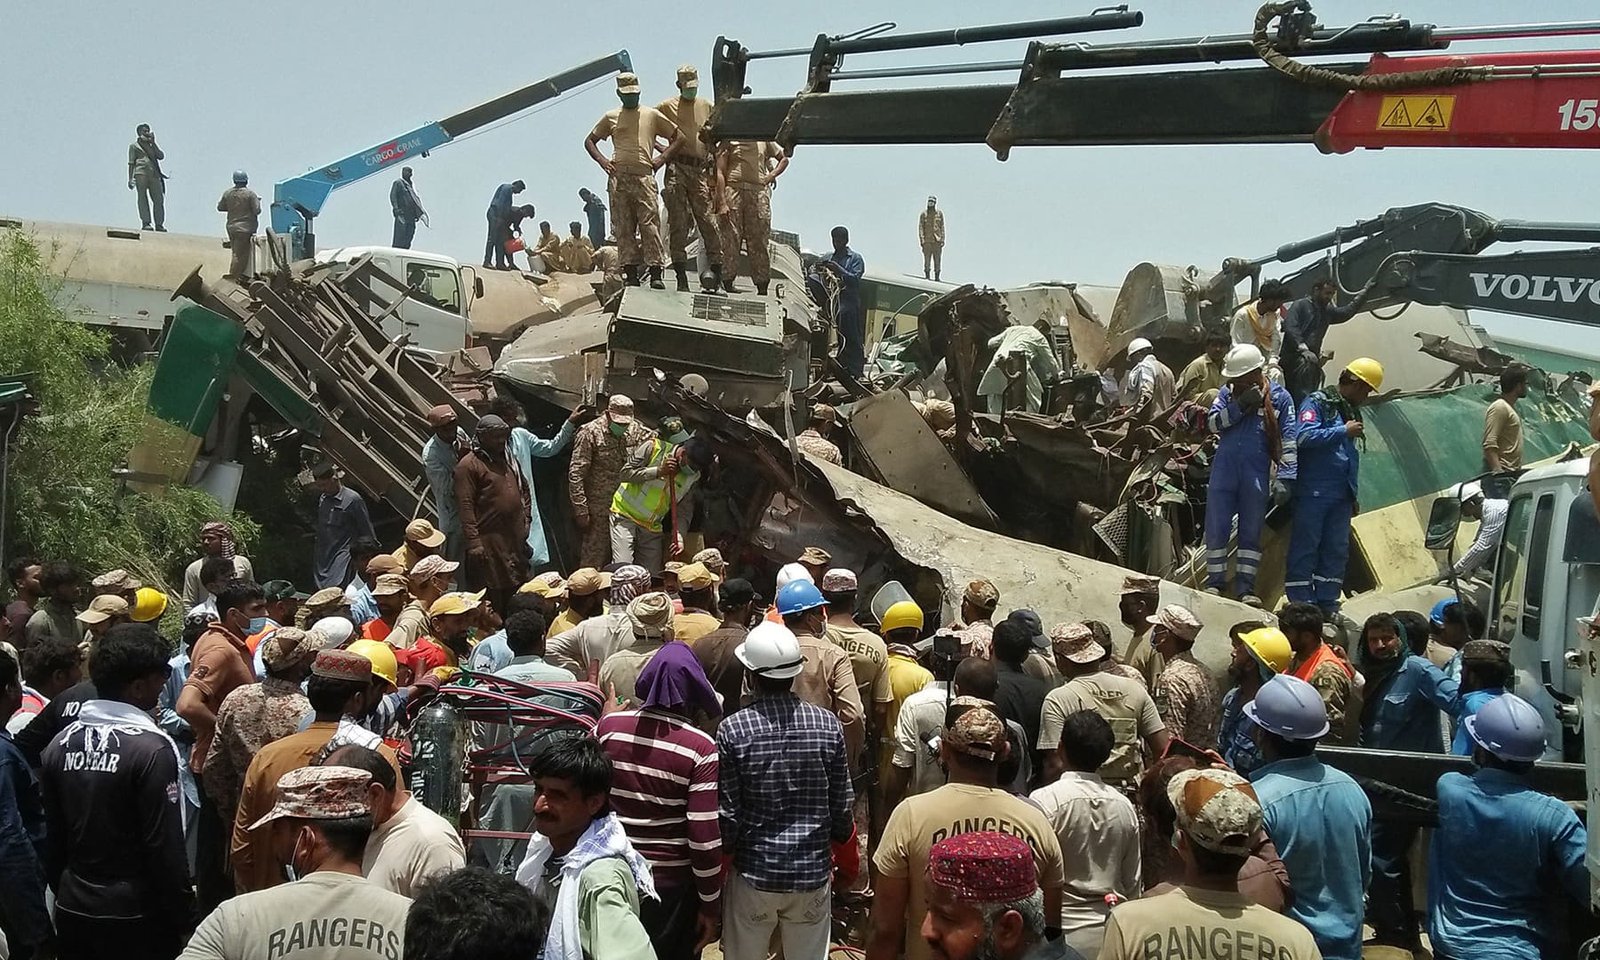 Dozens Killed After Passenger Trains Collide in Pakistan